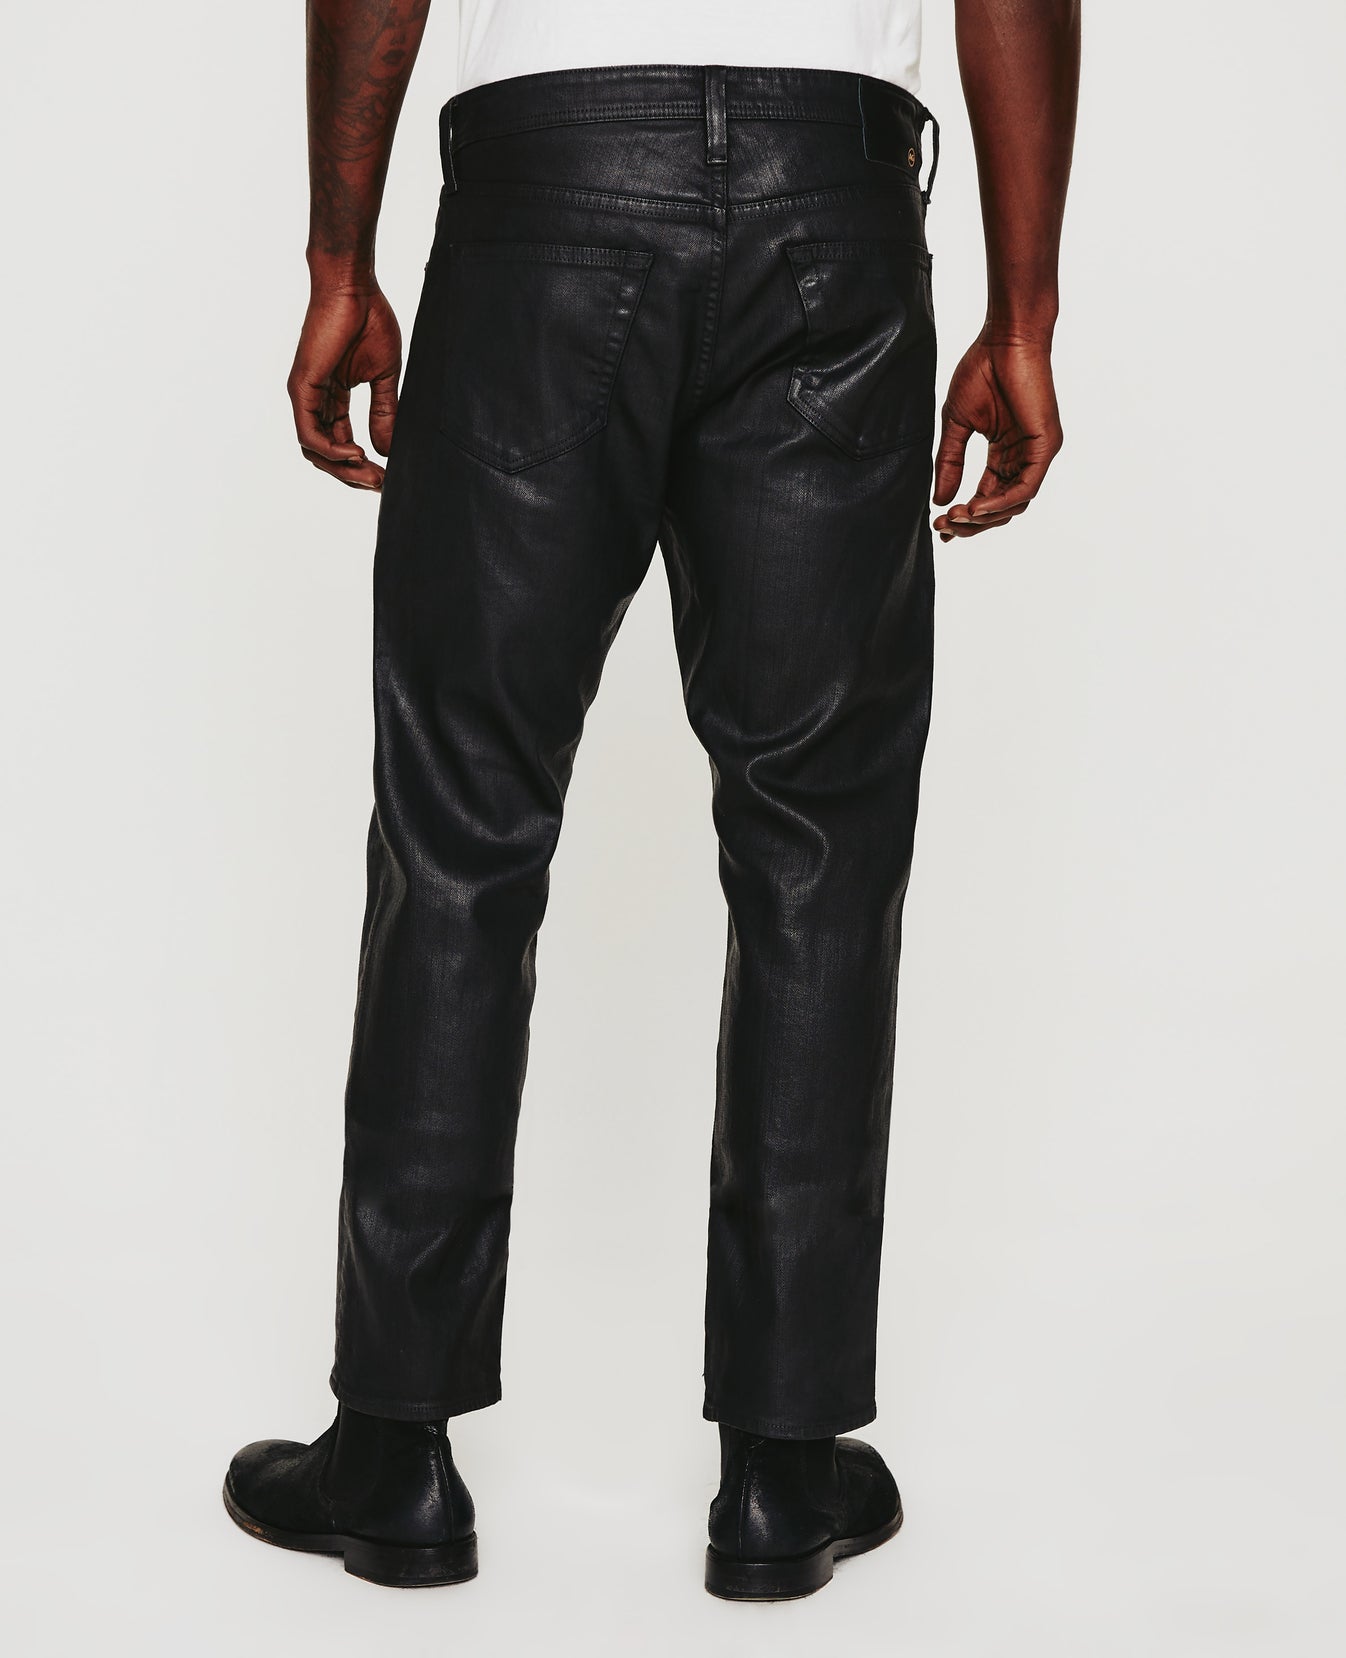 Tellis Leatherette Ct Charcoal Black Mens Bottom Photo 6